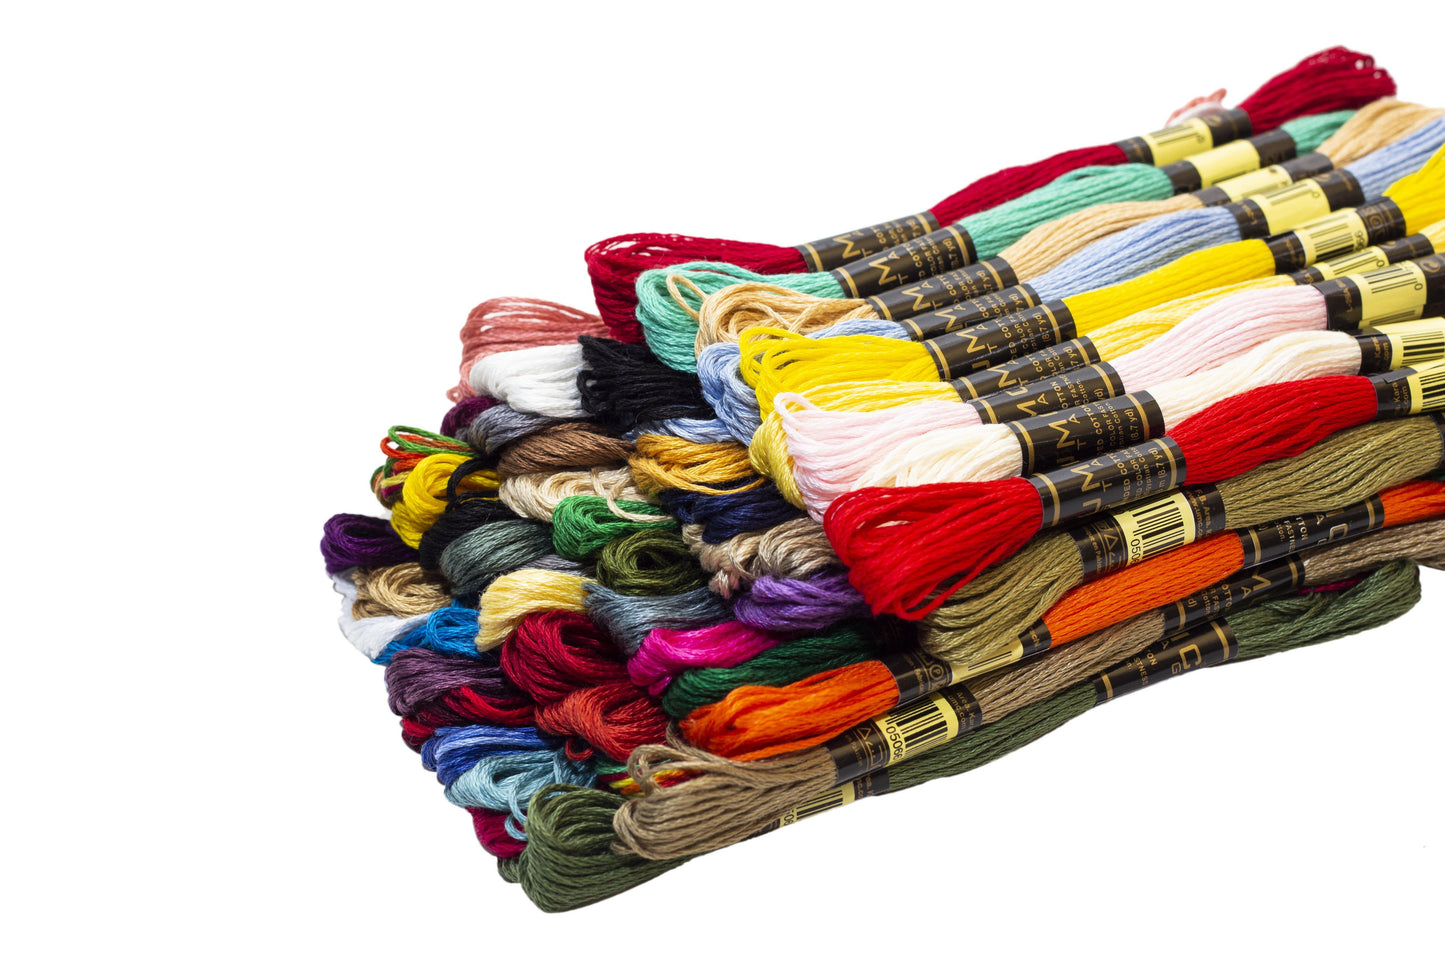 UMC STAG 24 Pieces White Colour Premium Embroidery Floss | 100% Egyptian  Cotton Premium Skeins | Cross Stitch Embroidery Thread | Oeko TEX Certified